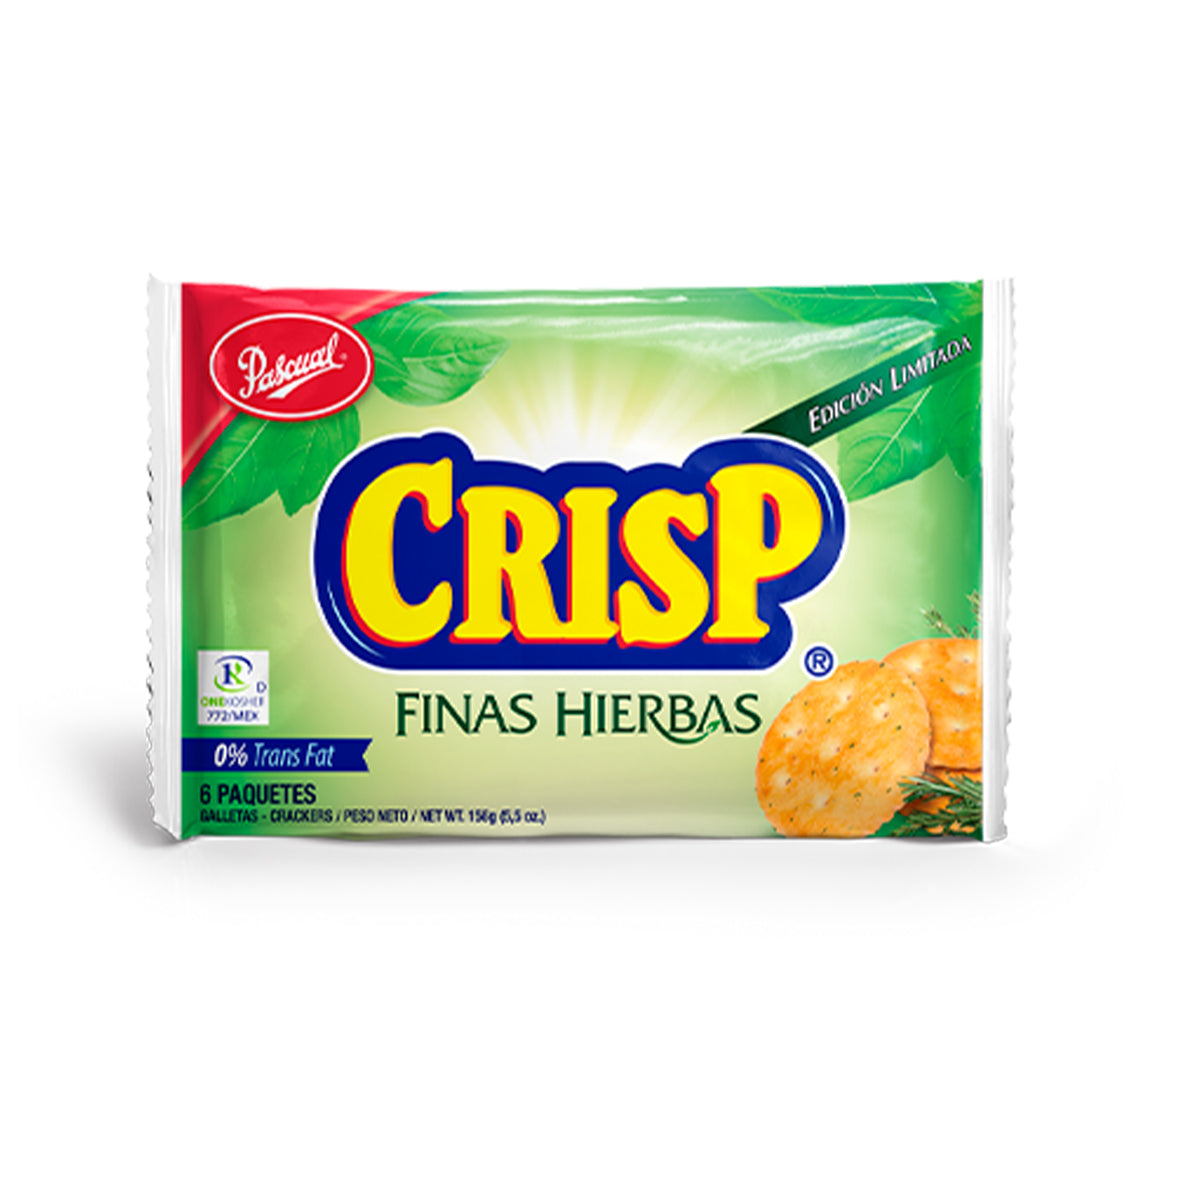 Galleta Crisp Finas Hierbas Pascual - 6 Pack